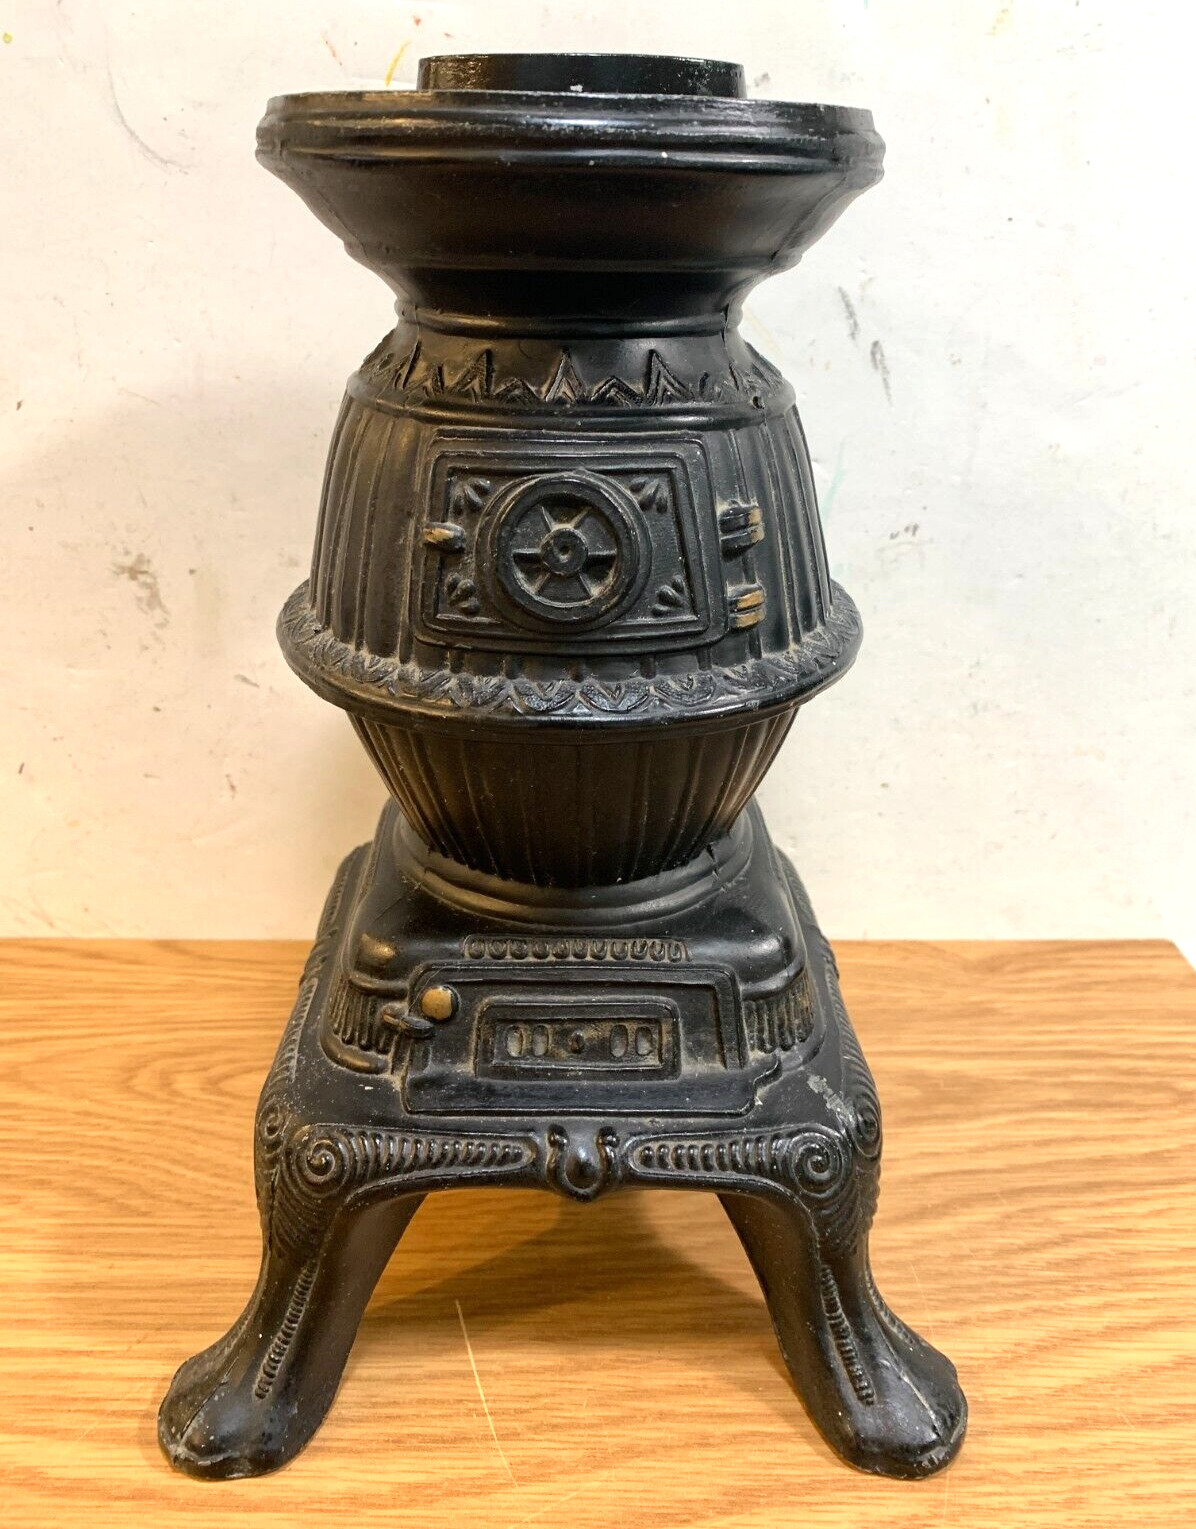 Vintage MCM Cast Metal Pot Belly Stove Lamp BASE ONLY for parts 5 1/2 pounds